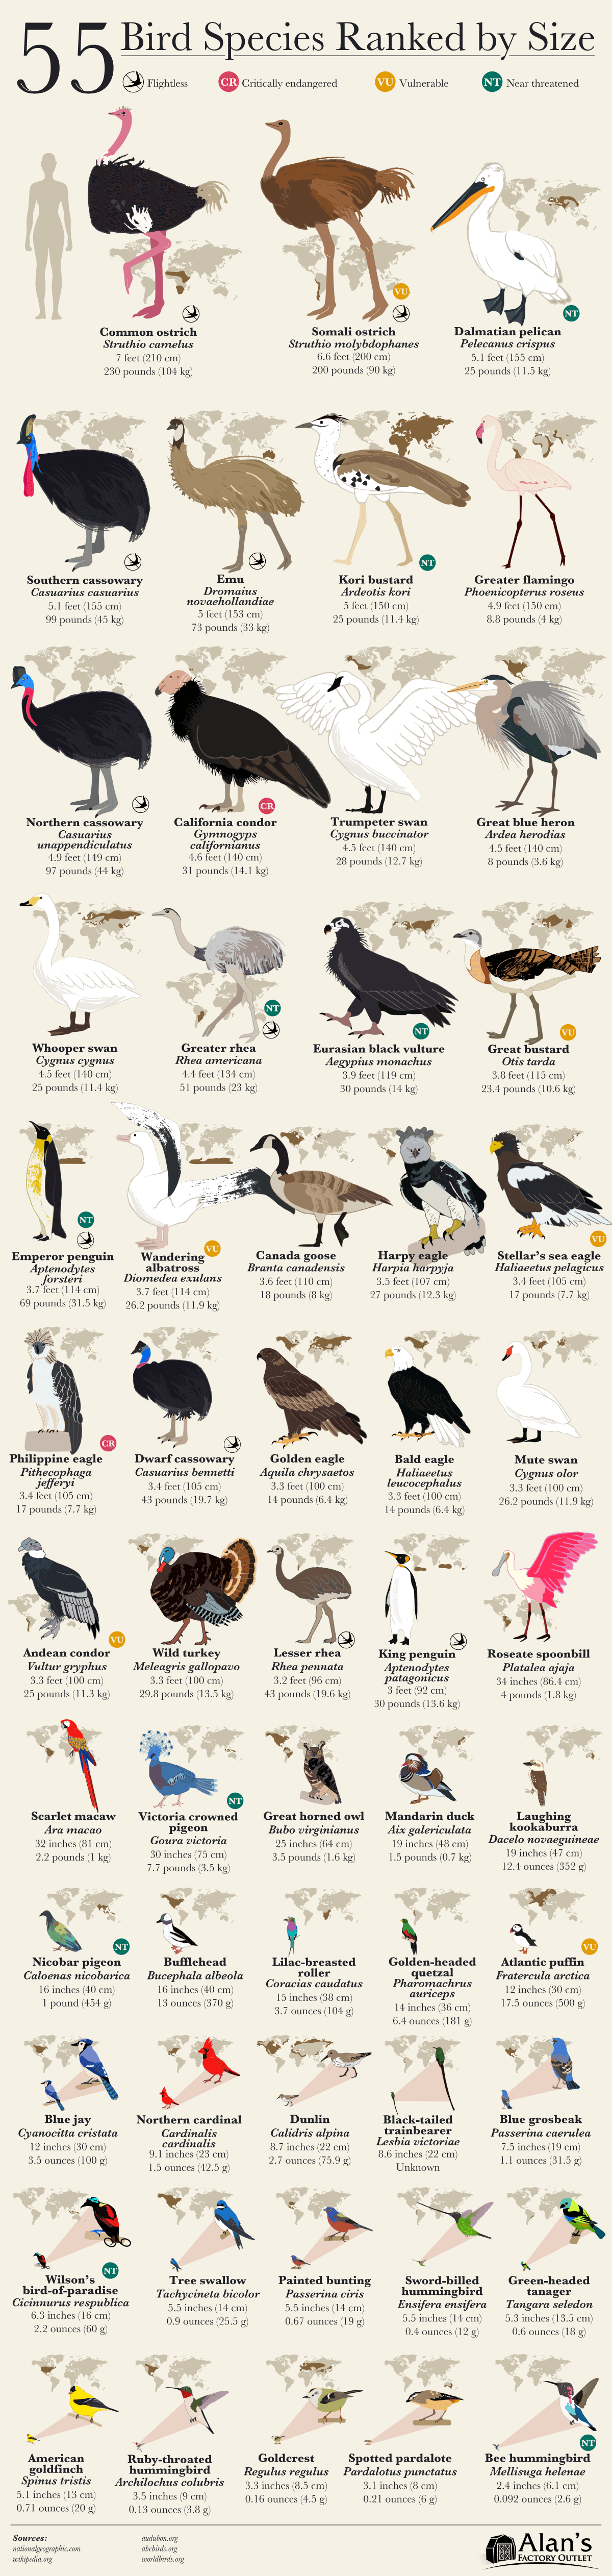 55-bird-species-ranked-by-size-3